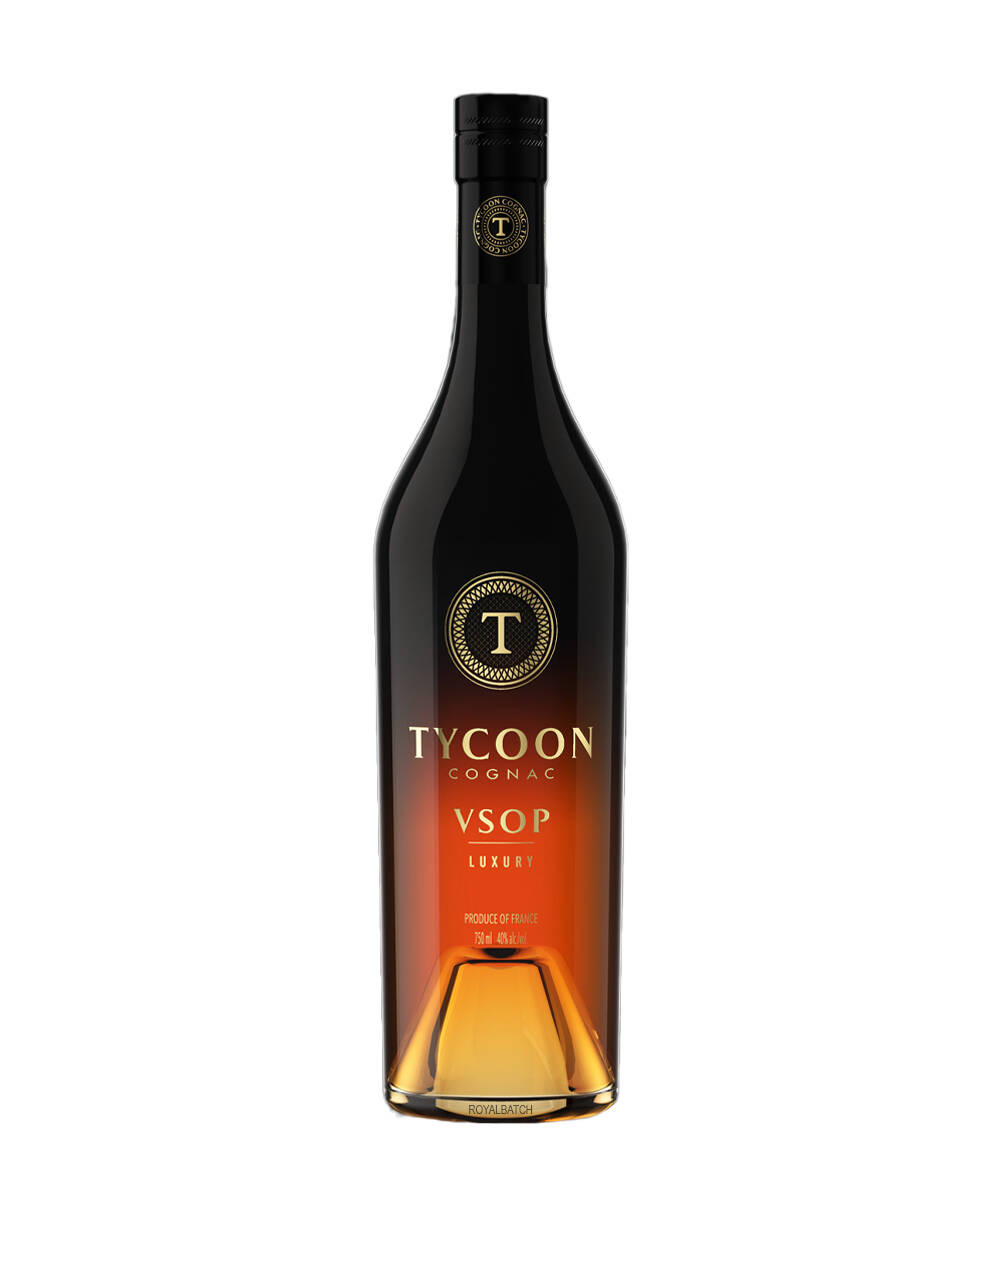 Tycoon VSOP Cognac